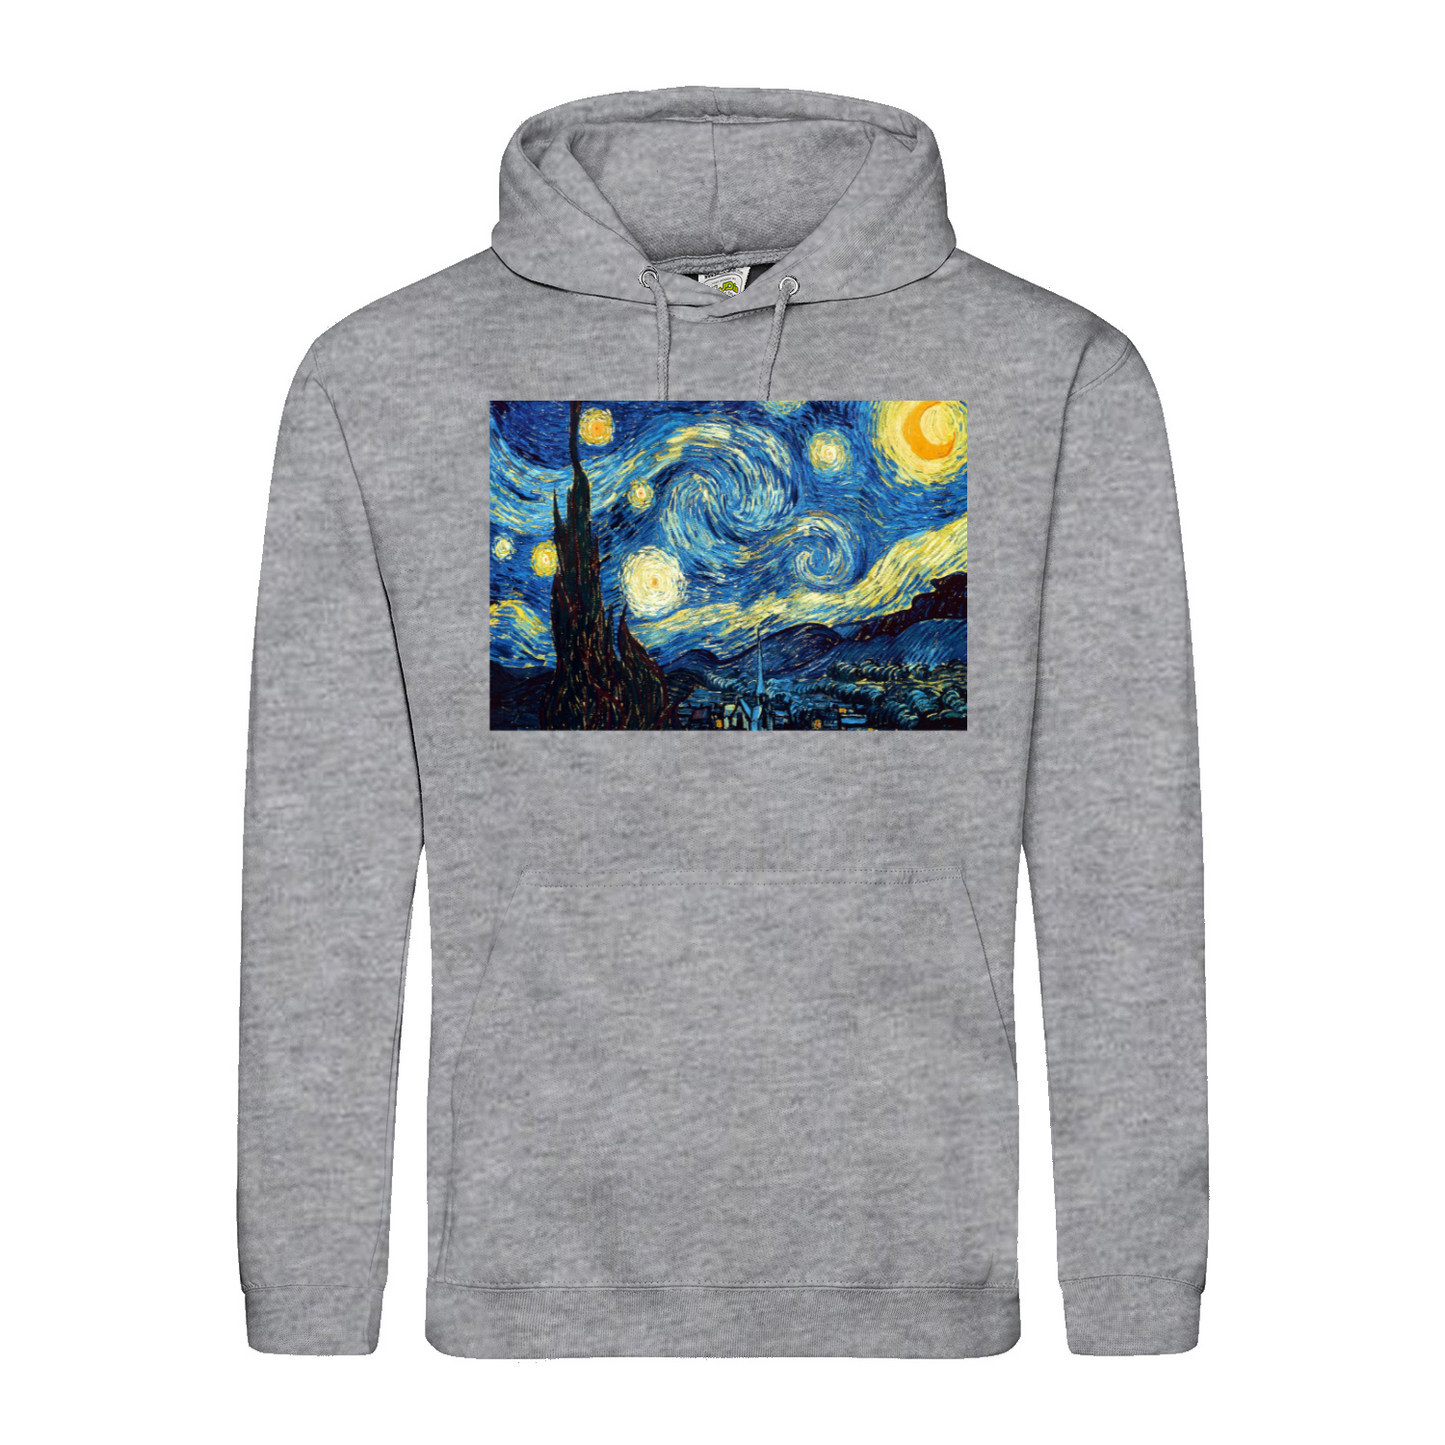 Hoodie "Starry Night"